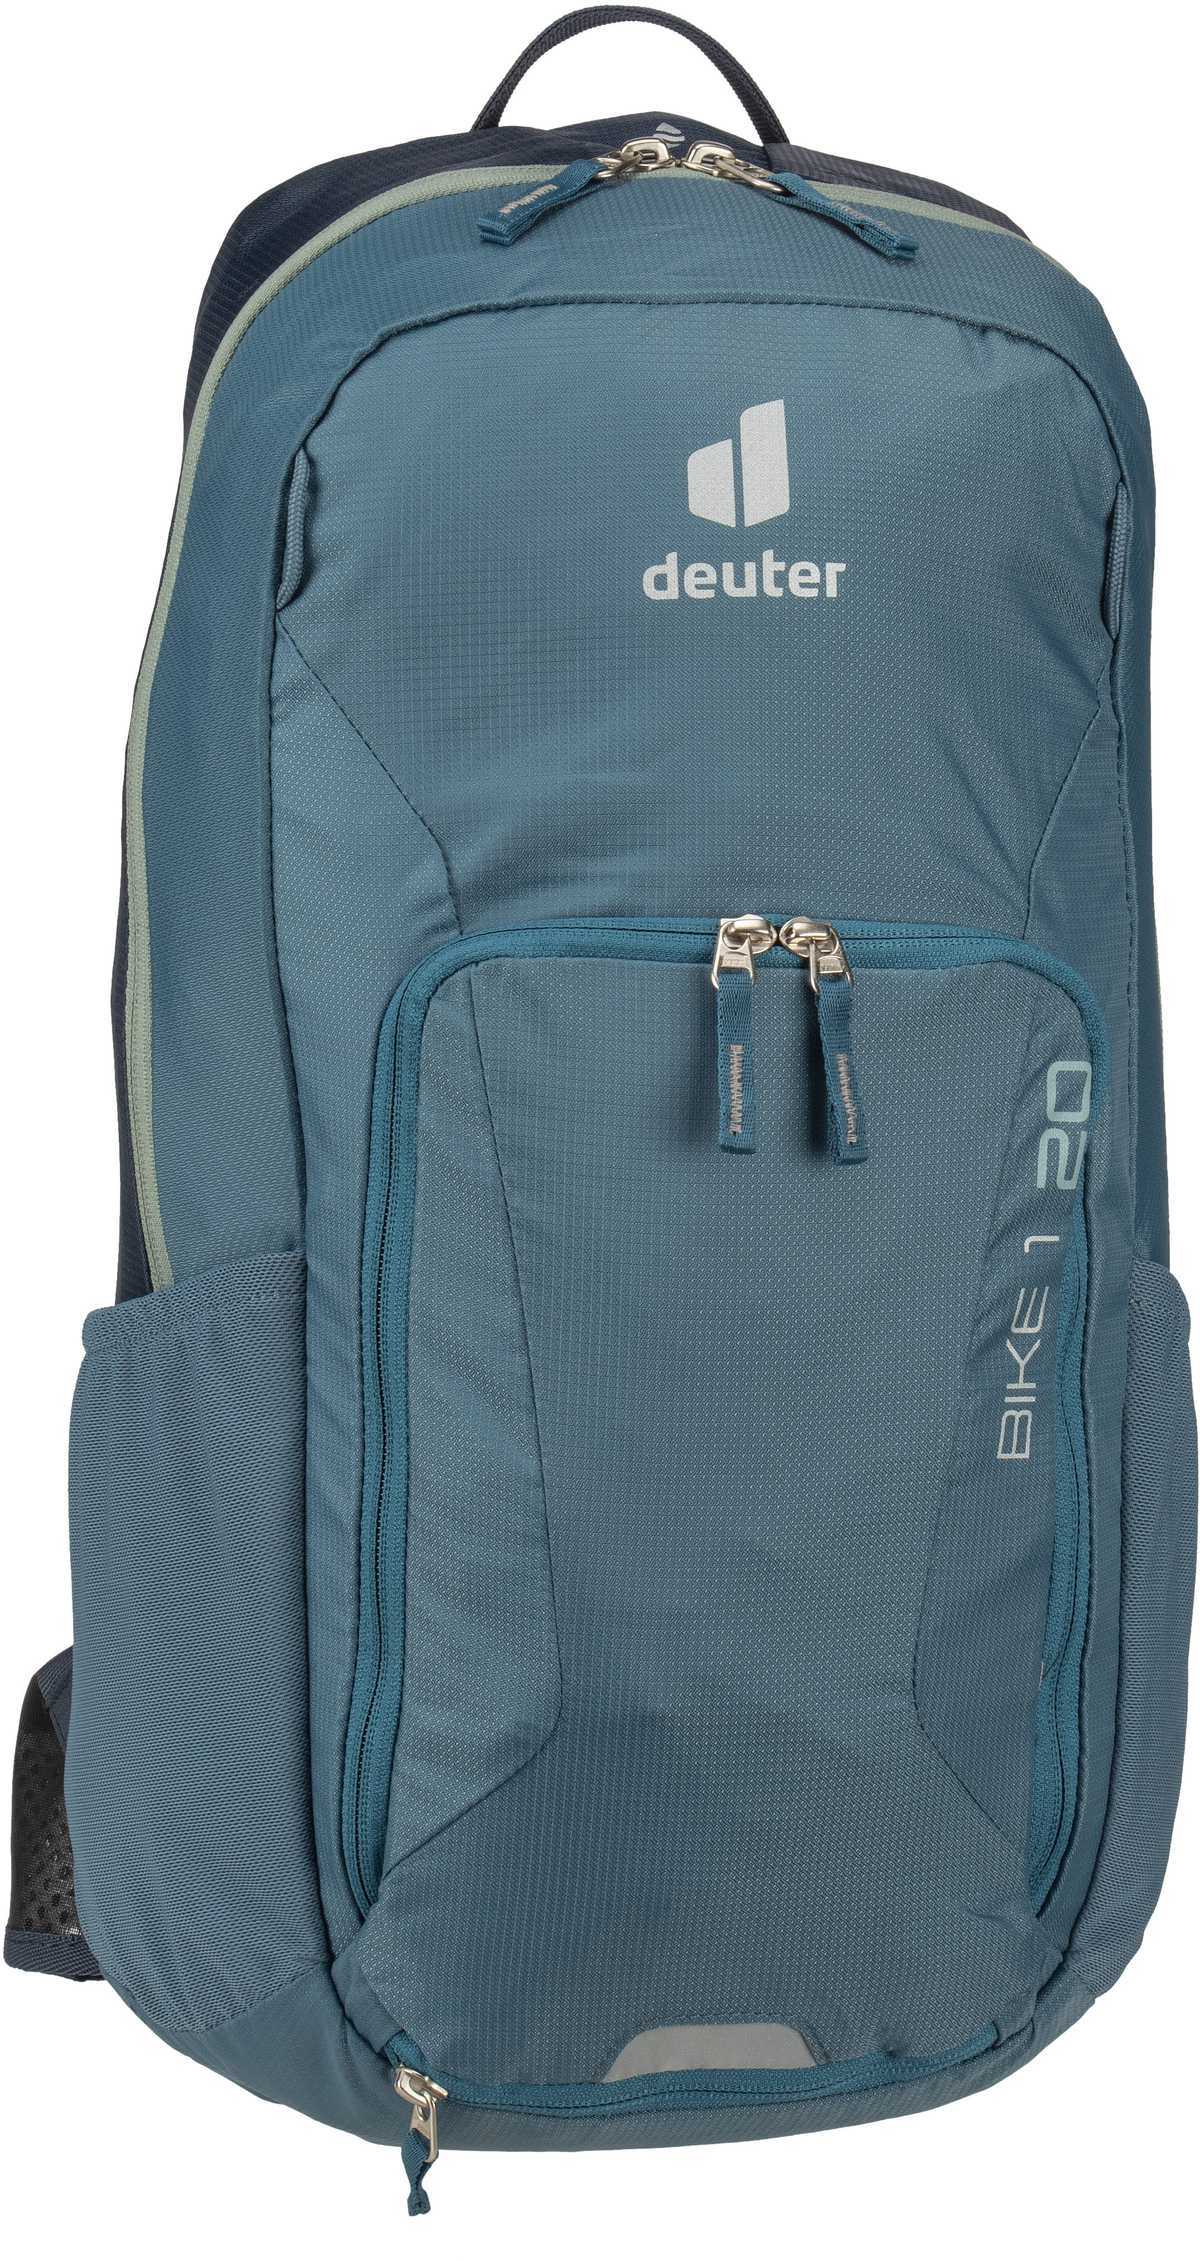 Deuter Deuter Bike I 20 in Blau (20 Liter), Rucksack / Backpack